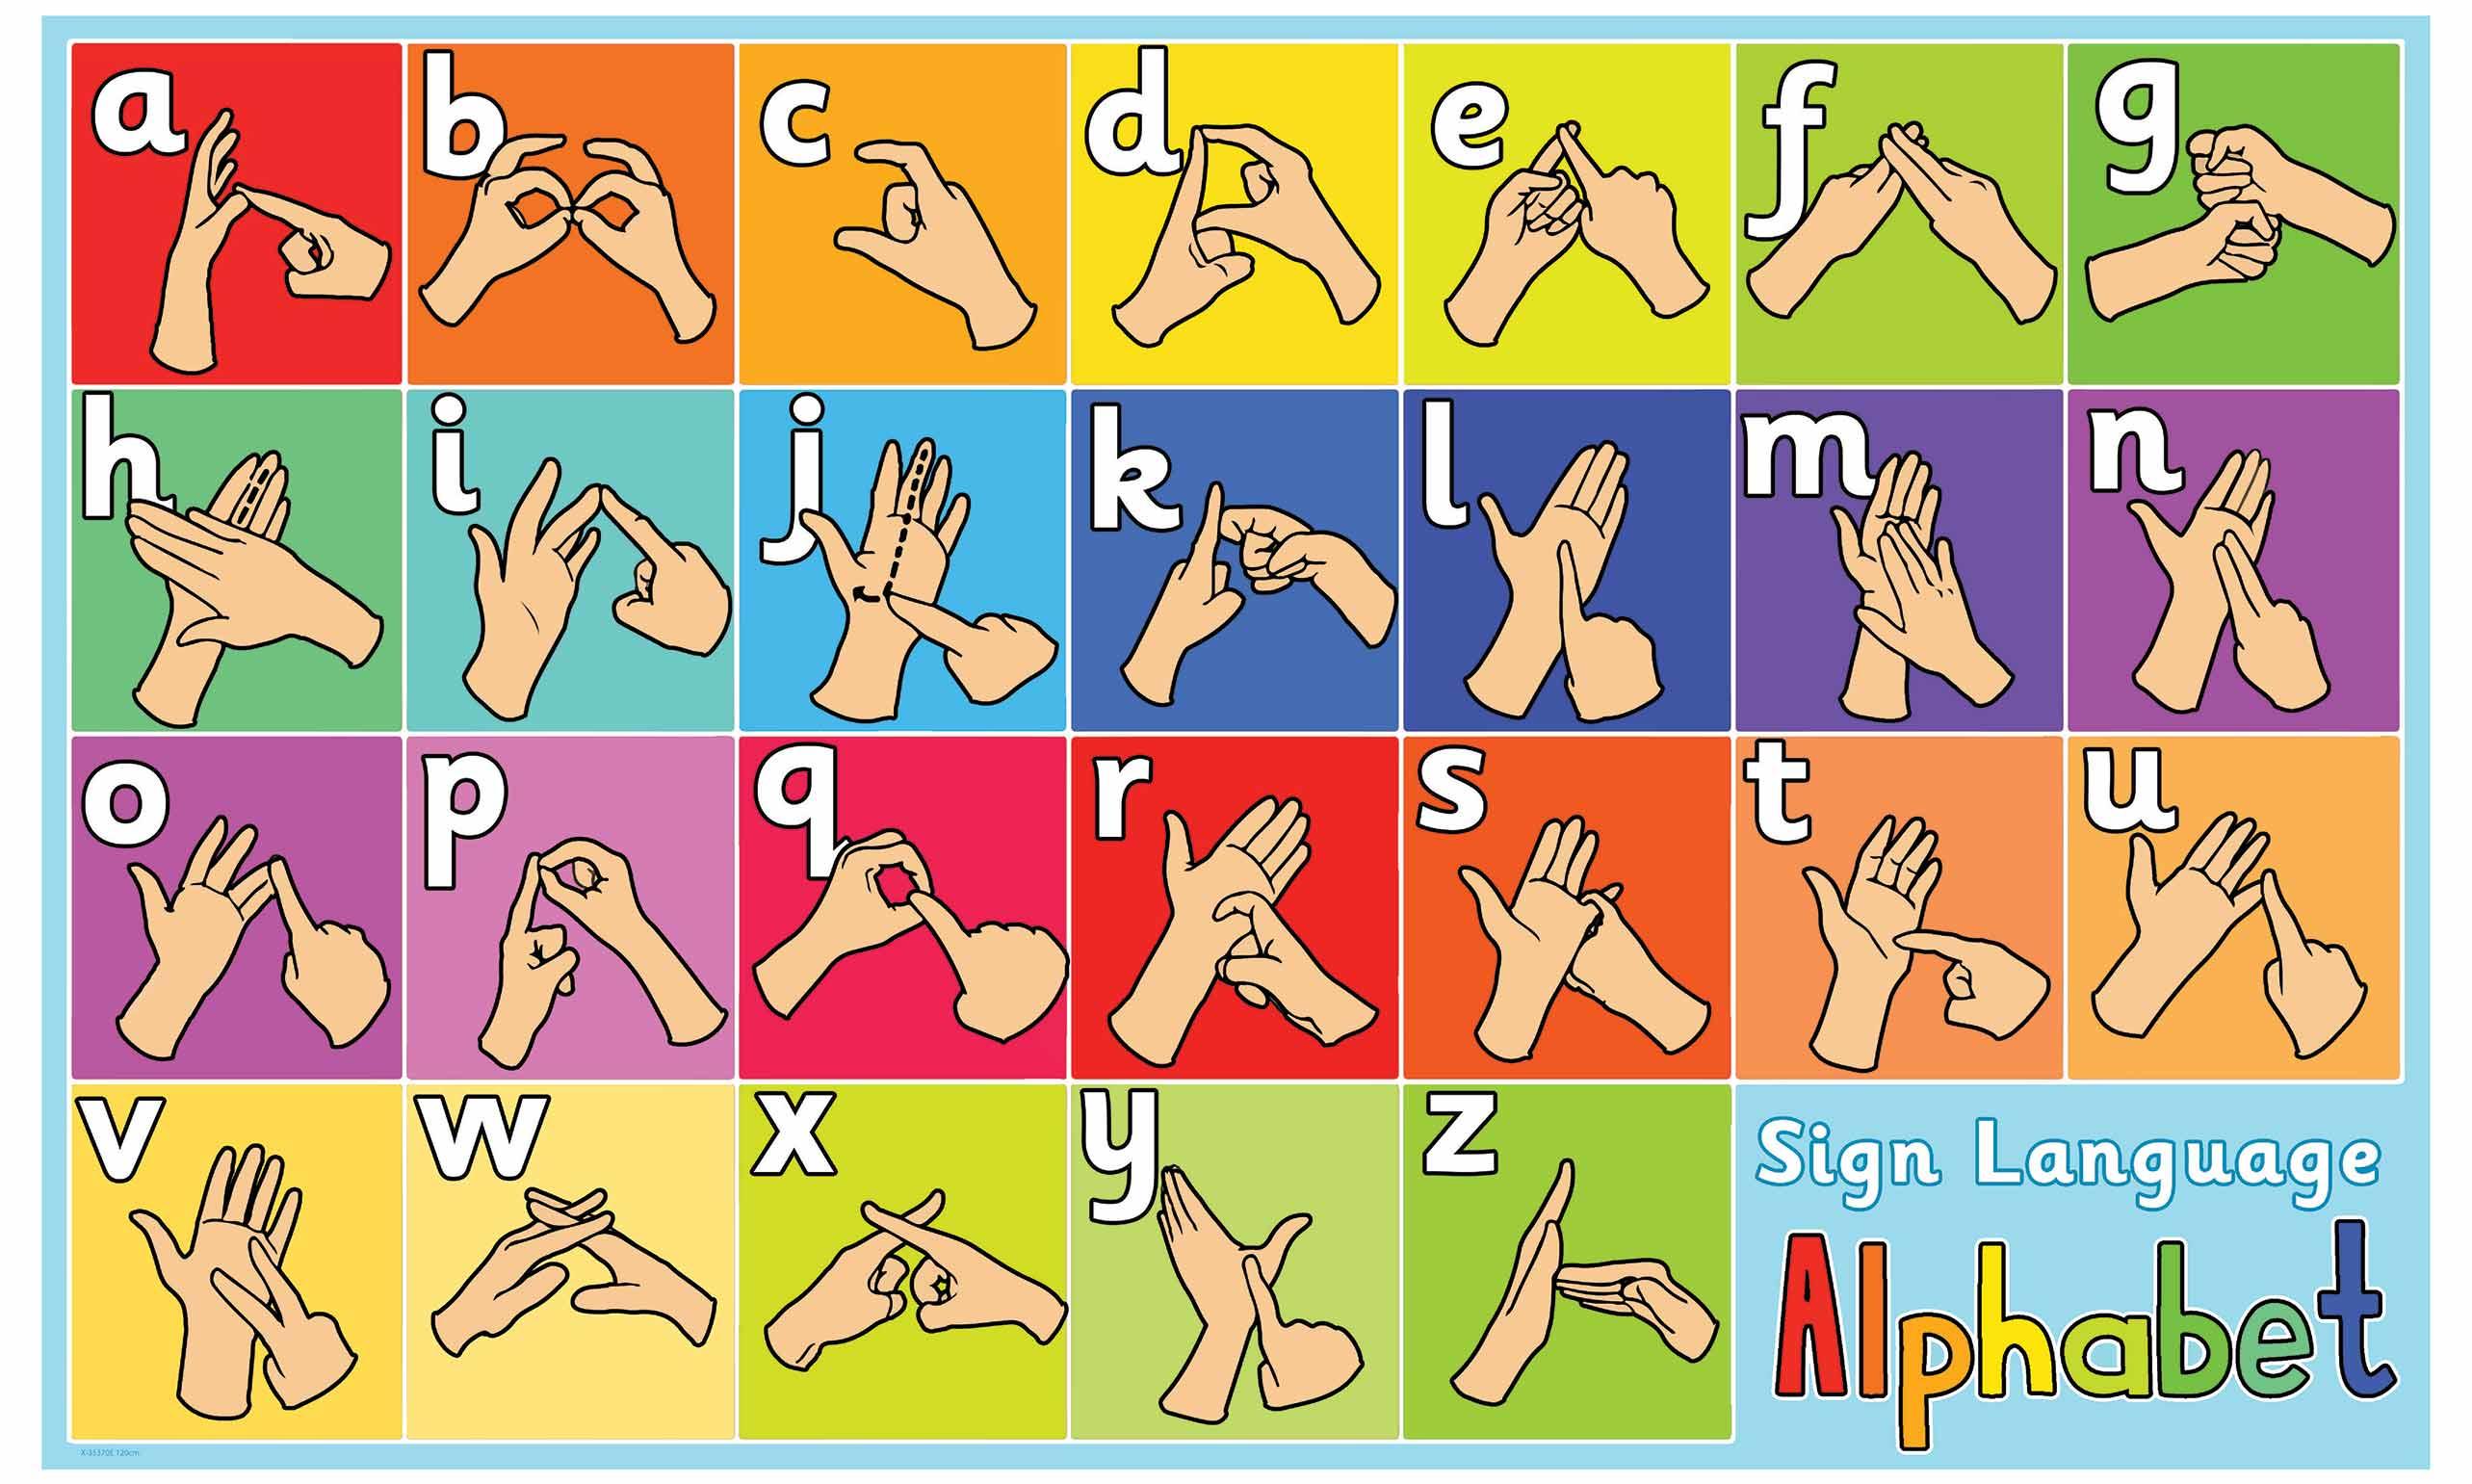 sign-language-sign